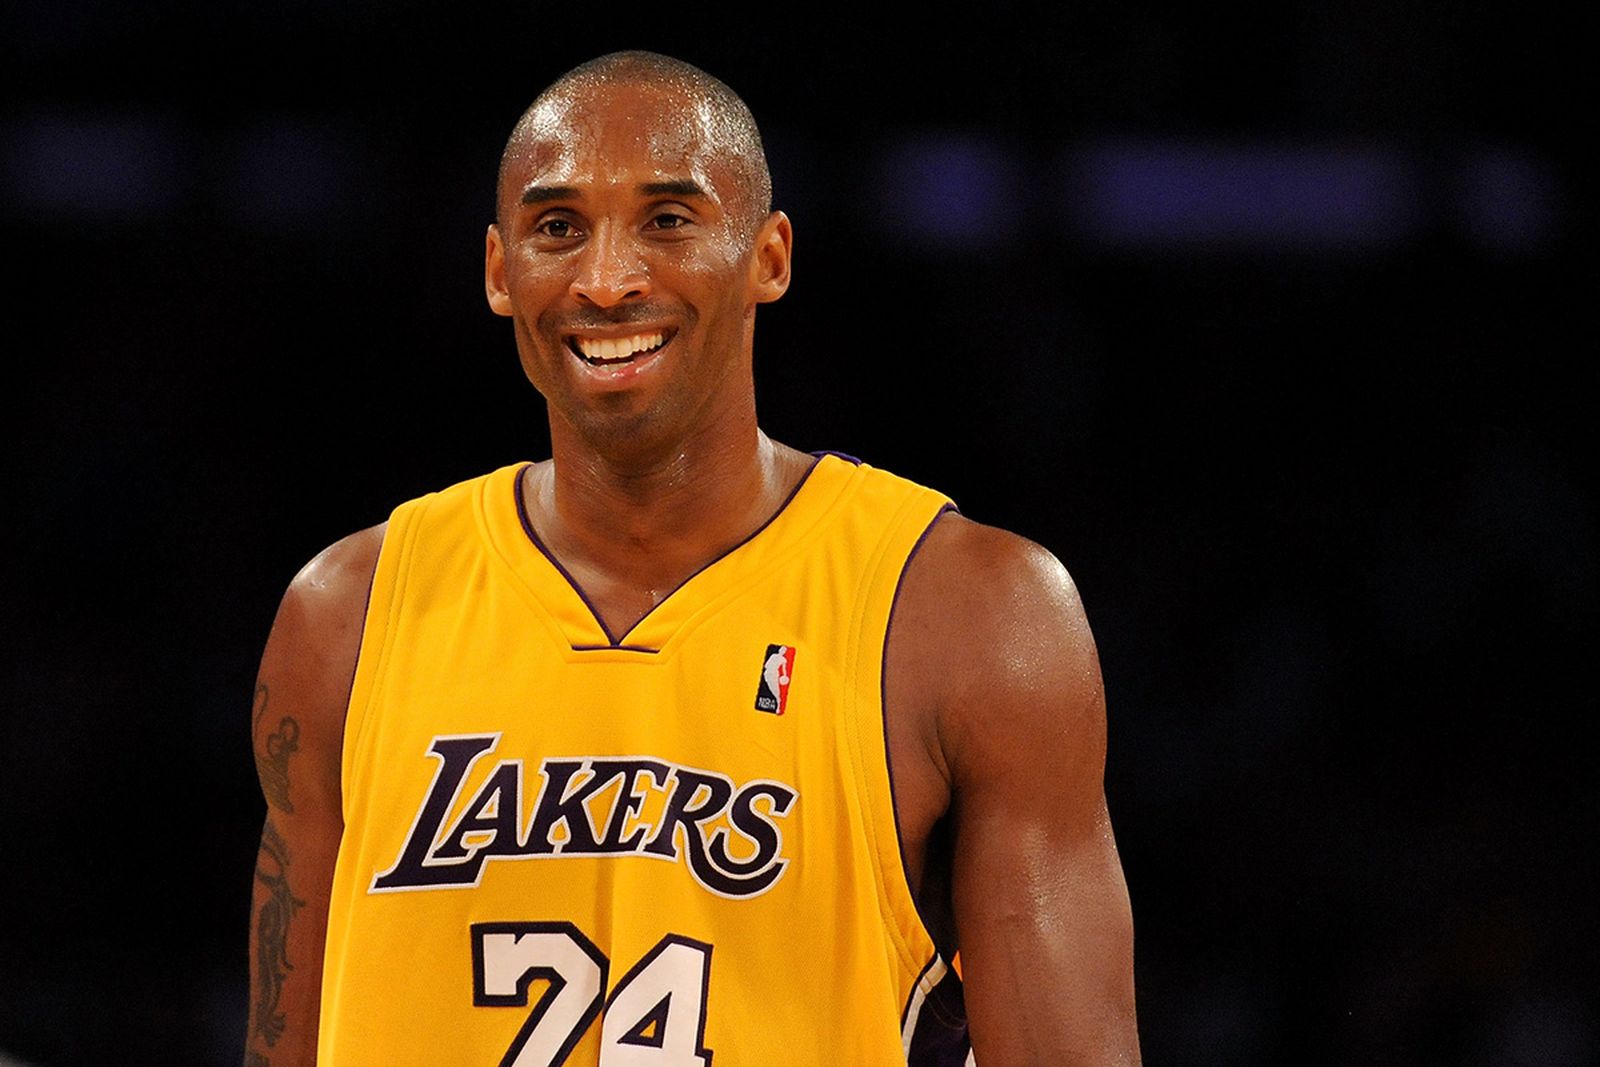 Kobe Bryant smiling on the basketball court